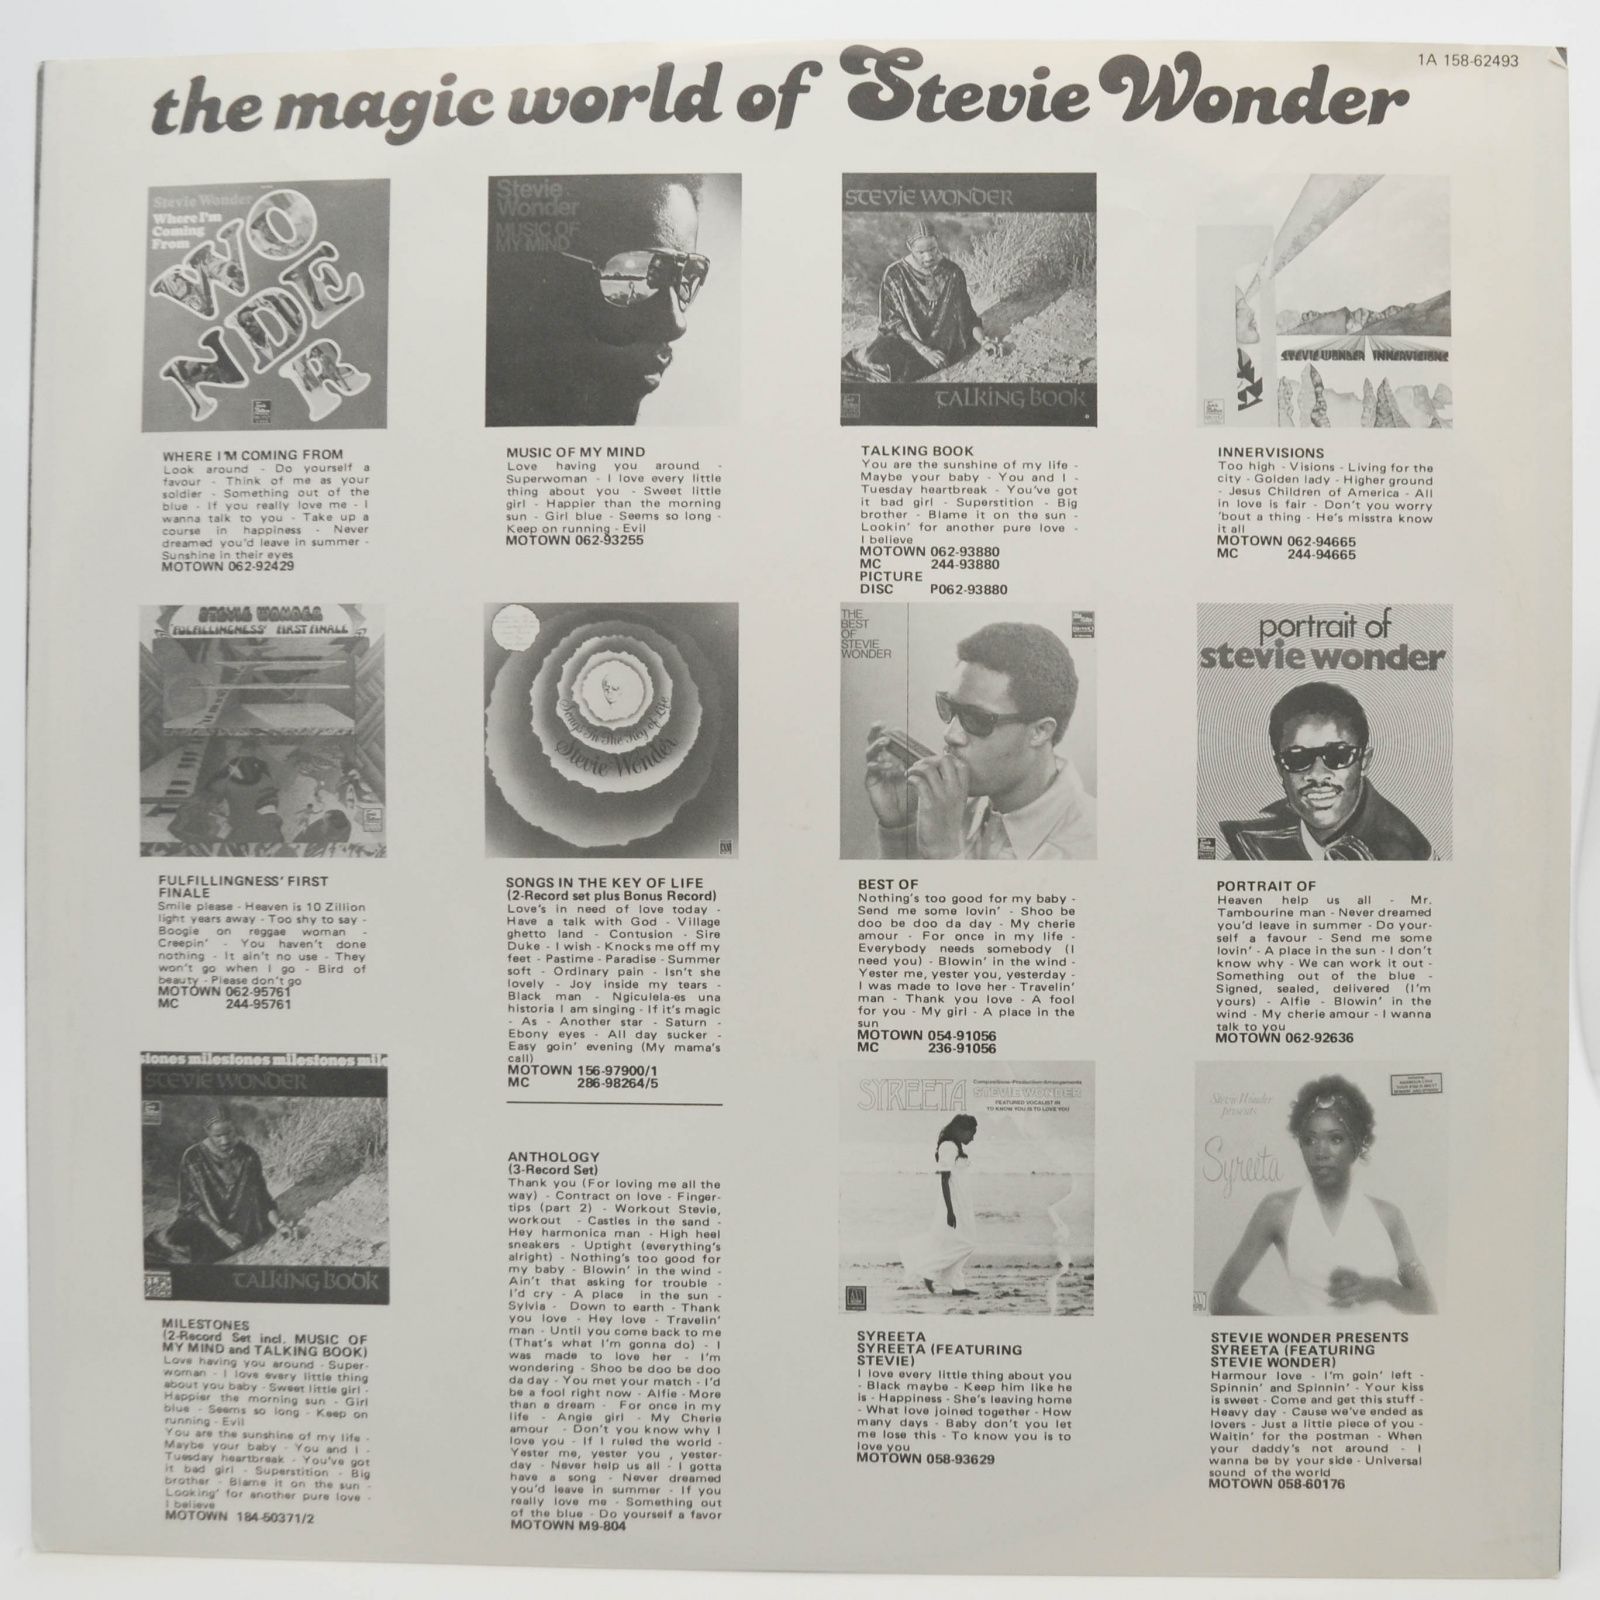 Stevie Wonder — Journey Through The Secret Life Of Plants (2LP), 1979